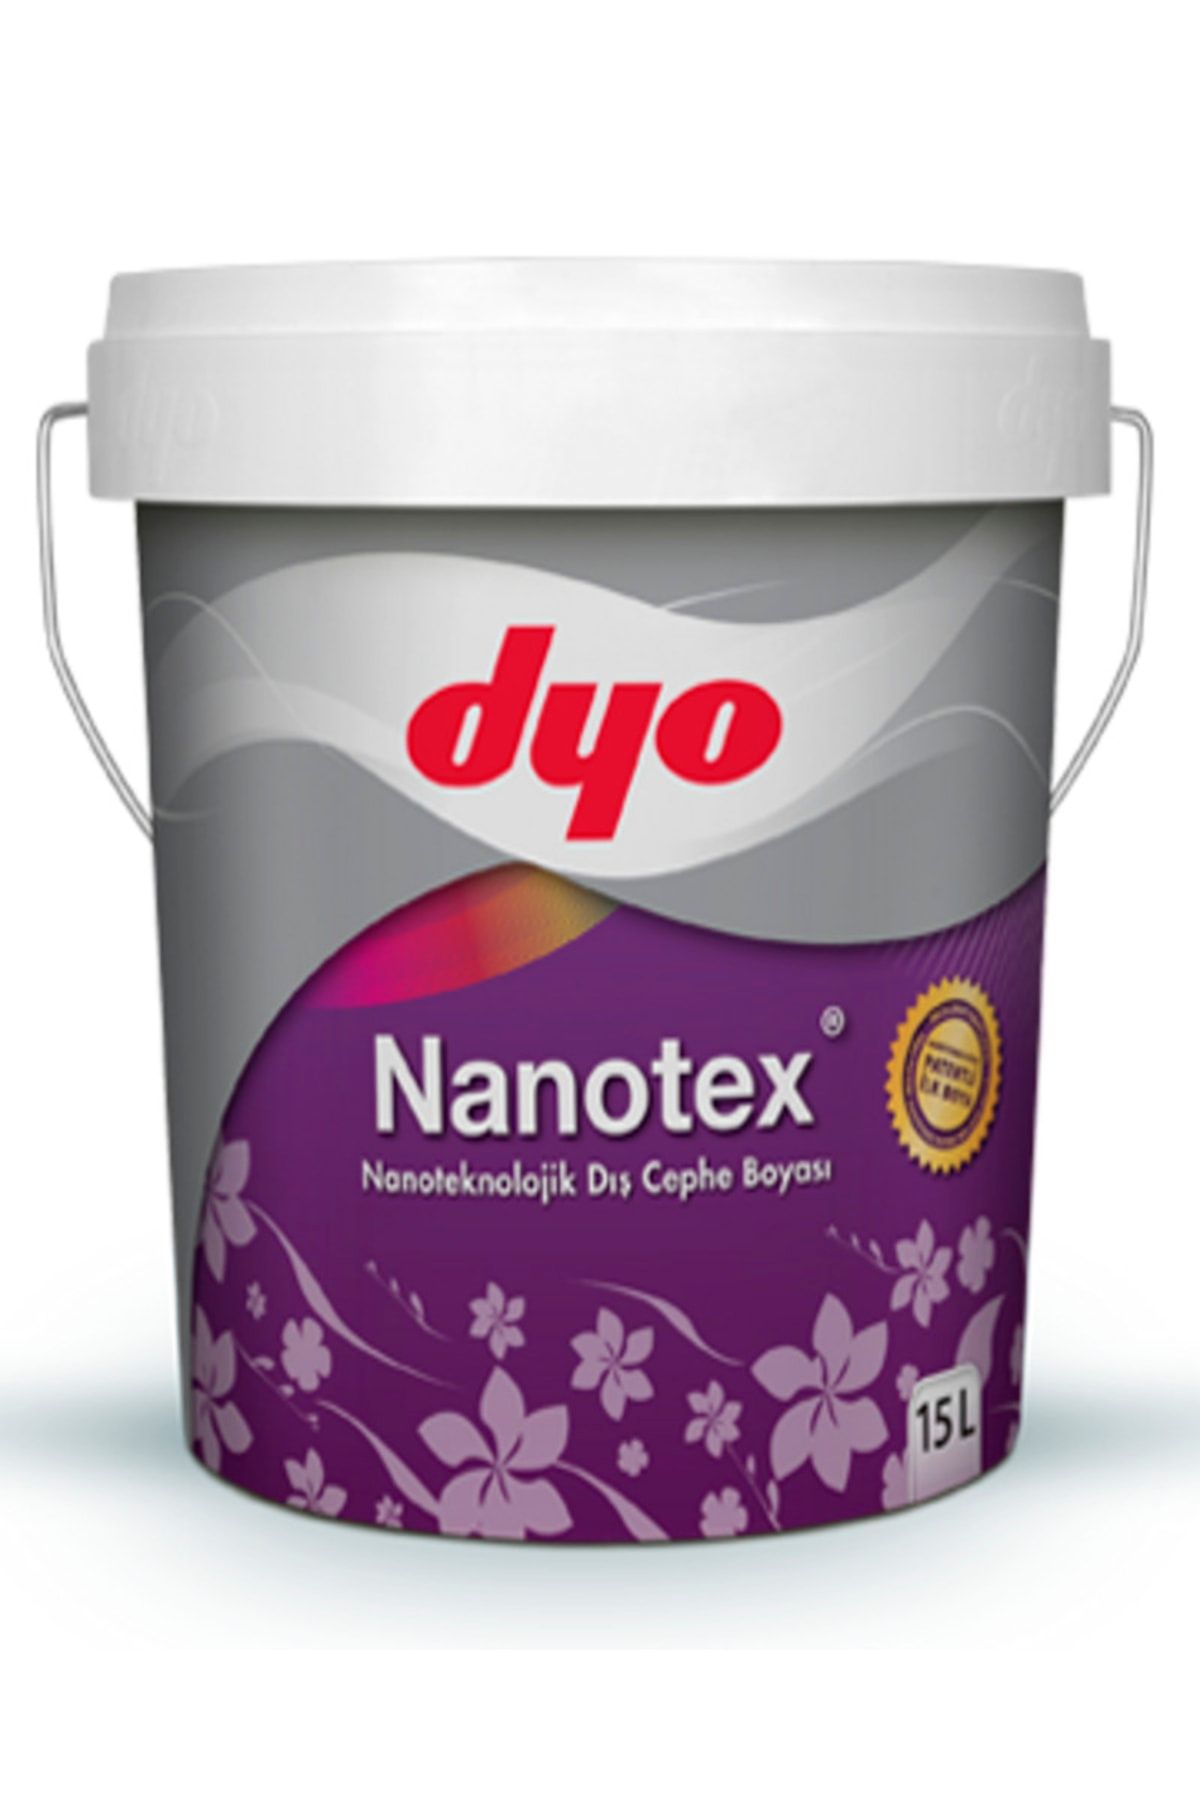 Dyo Nanotex Nanoteknolojik, Dış Cephe Boyası 15lt